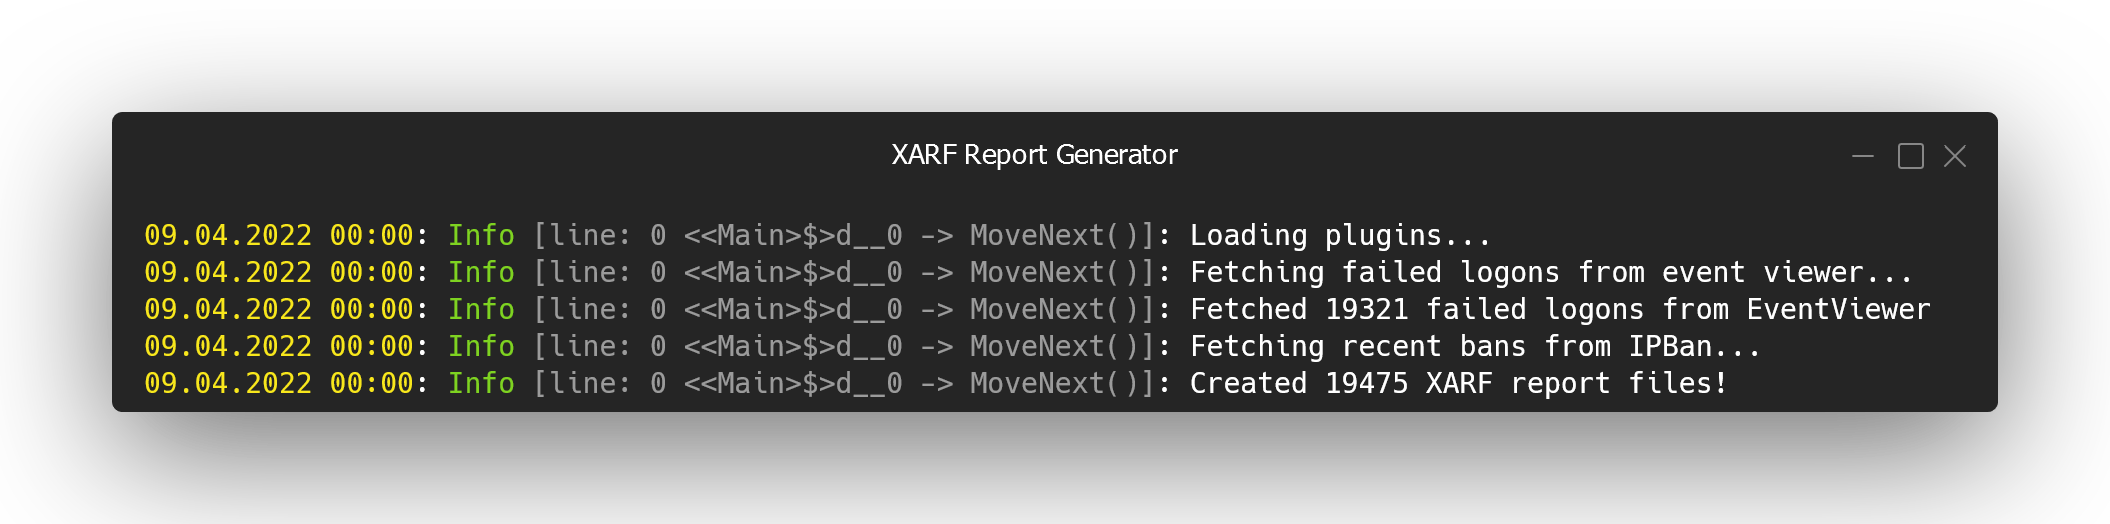 xarf-report-generator